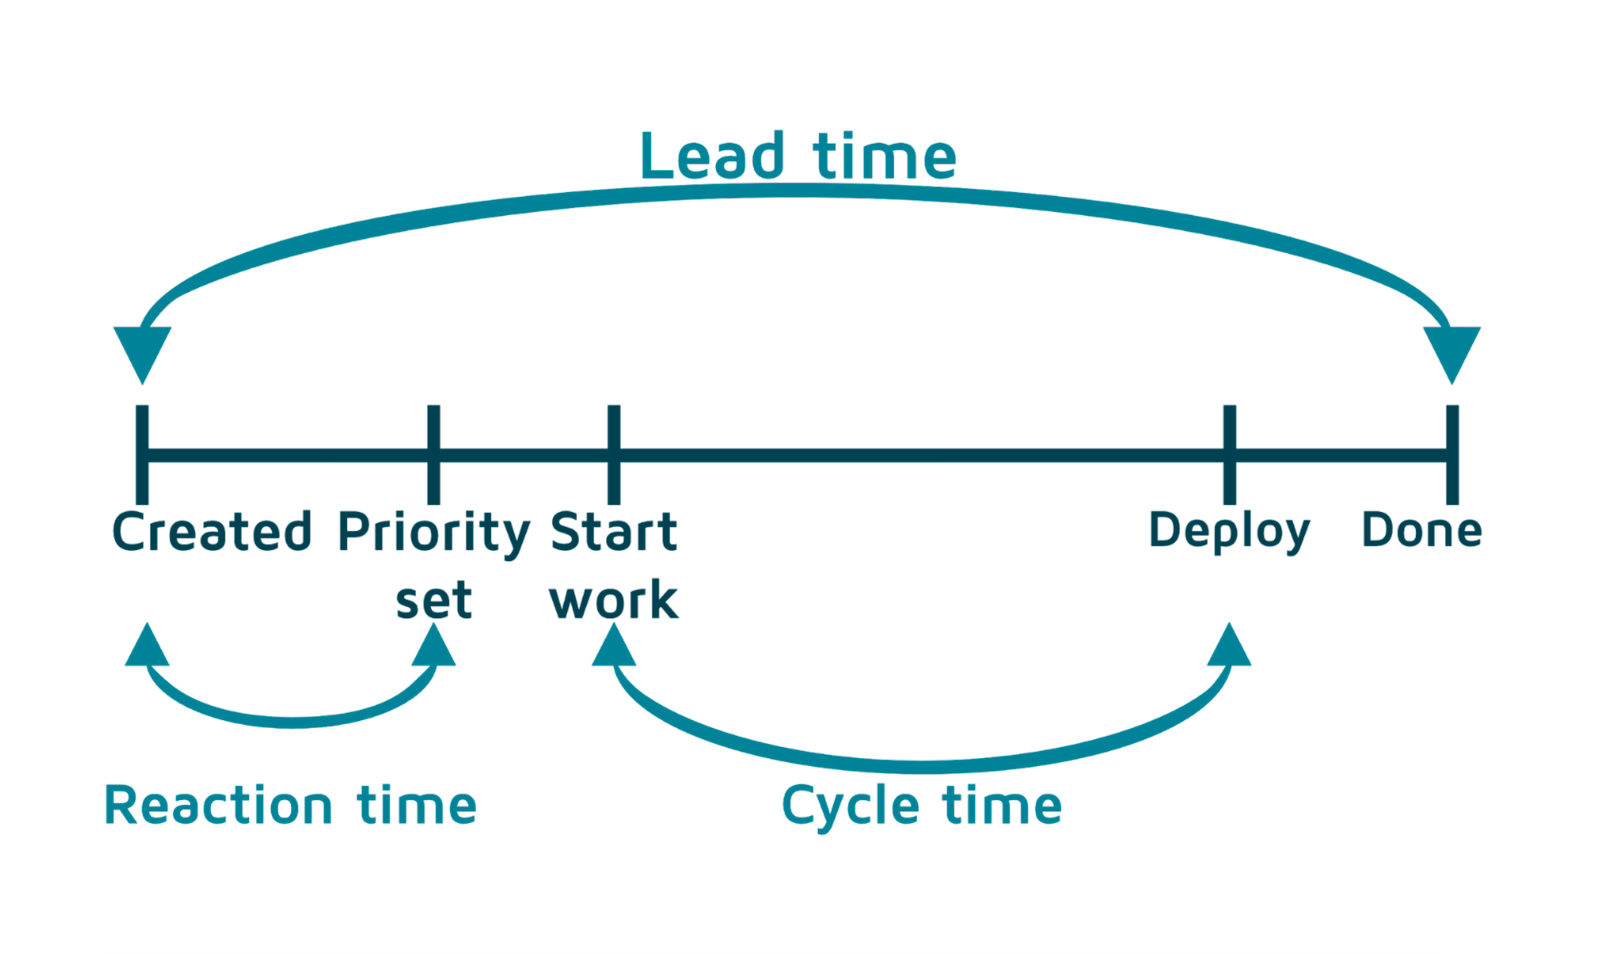 Lead order. Канбан lead time. Lead time Cycle time. Метрики Канбан. Диаграмма Канбан.